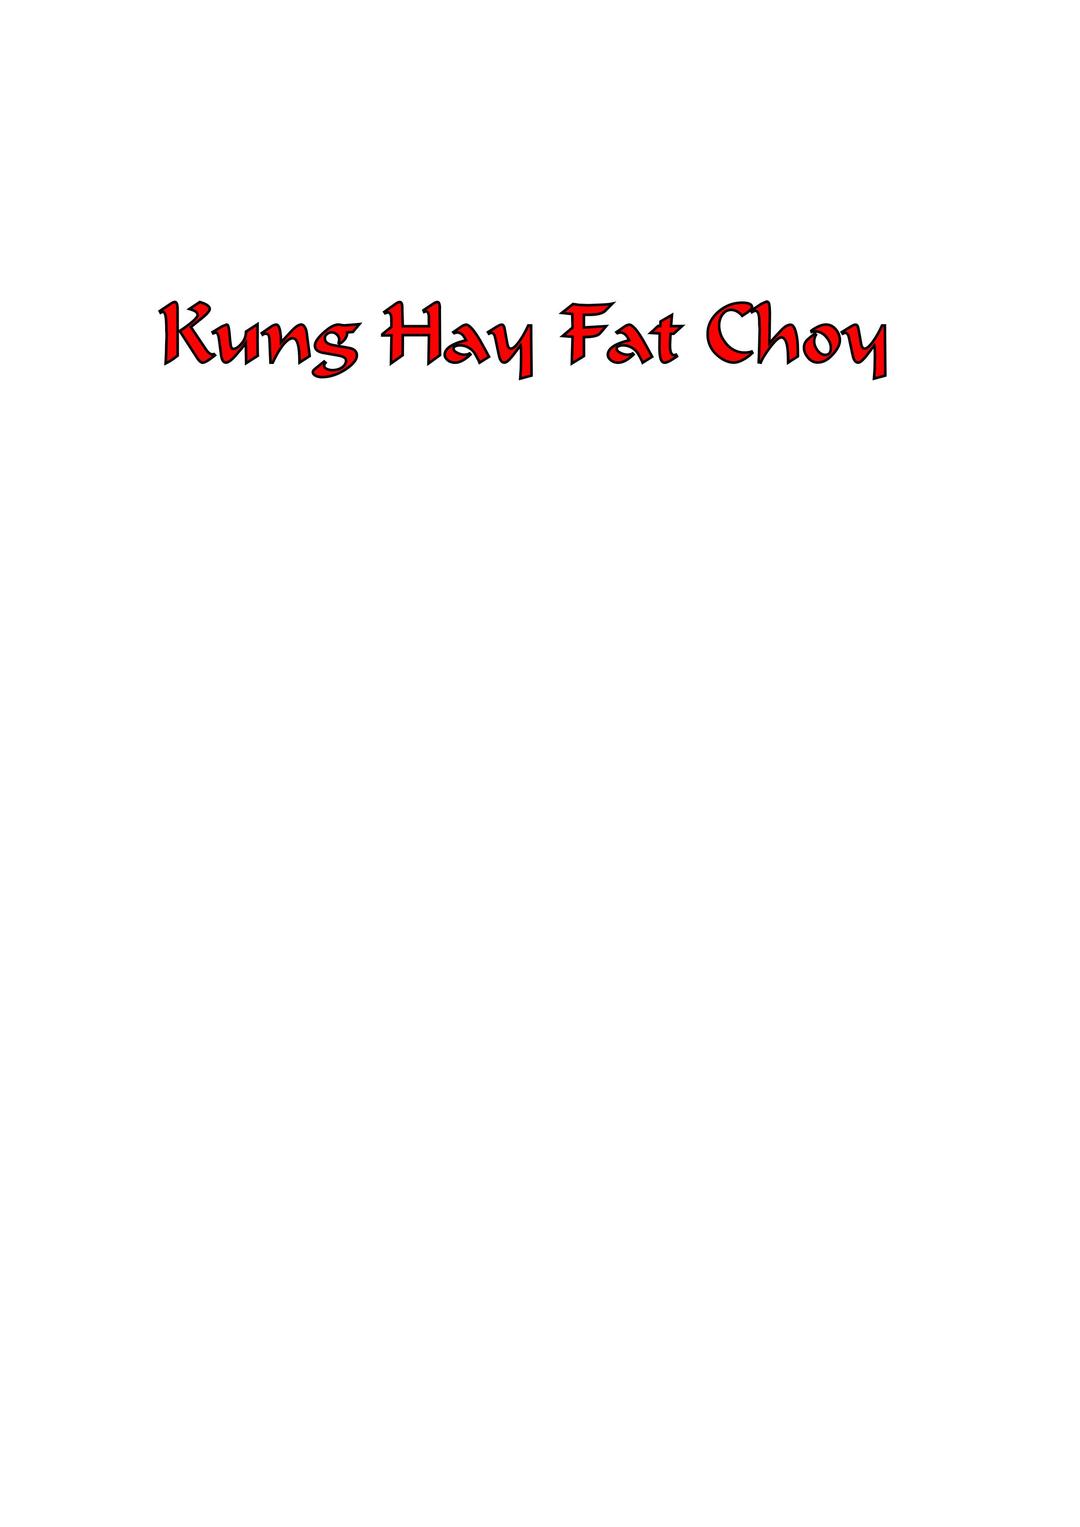 Kung Hay Fat Choy png transparent